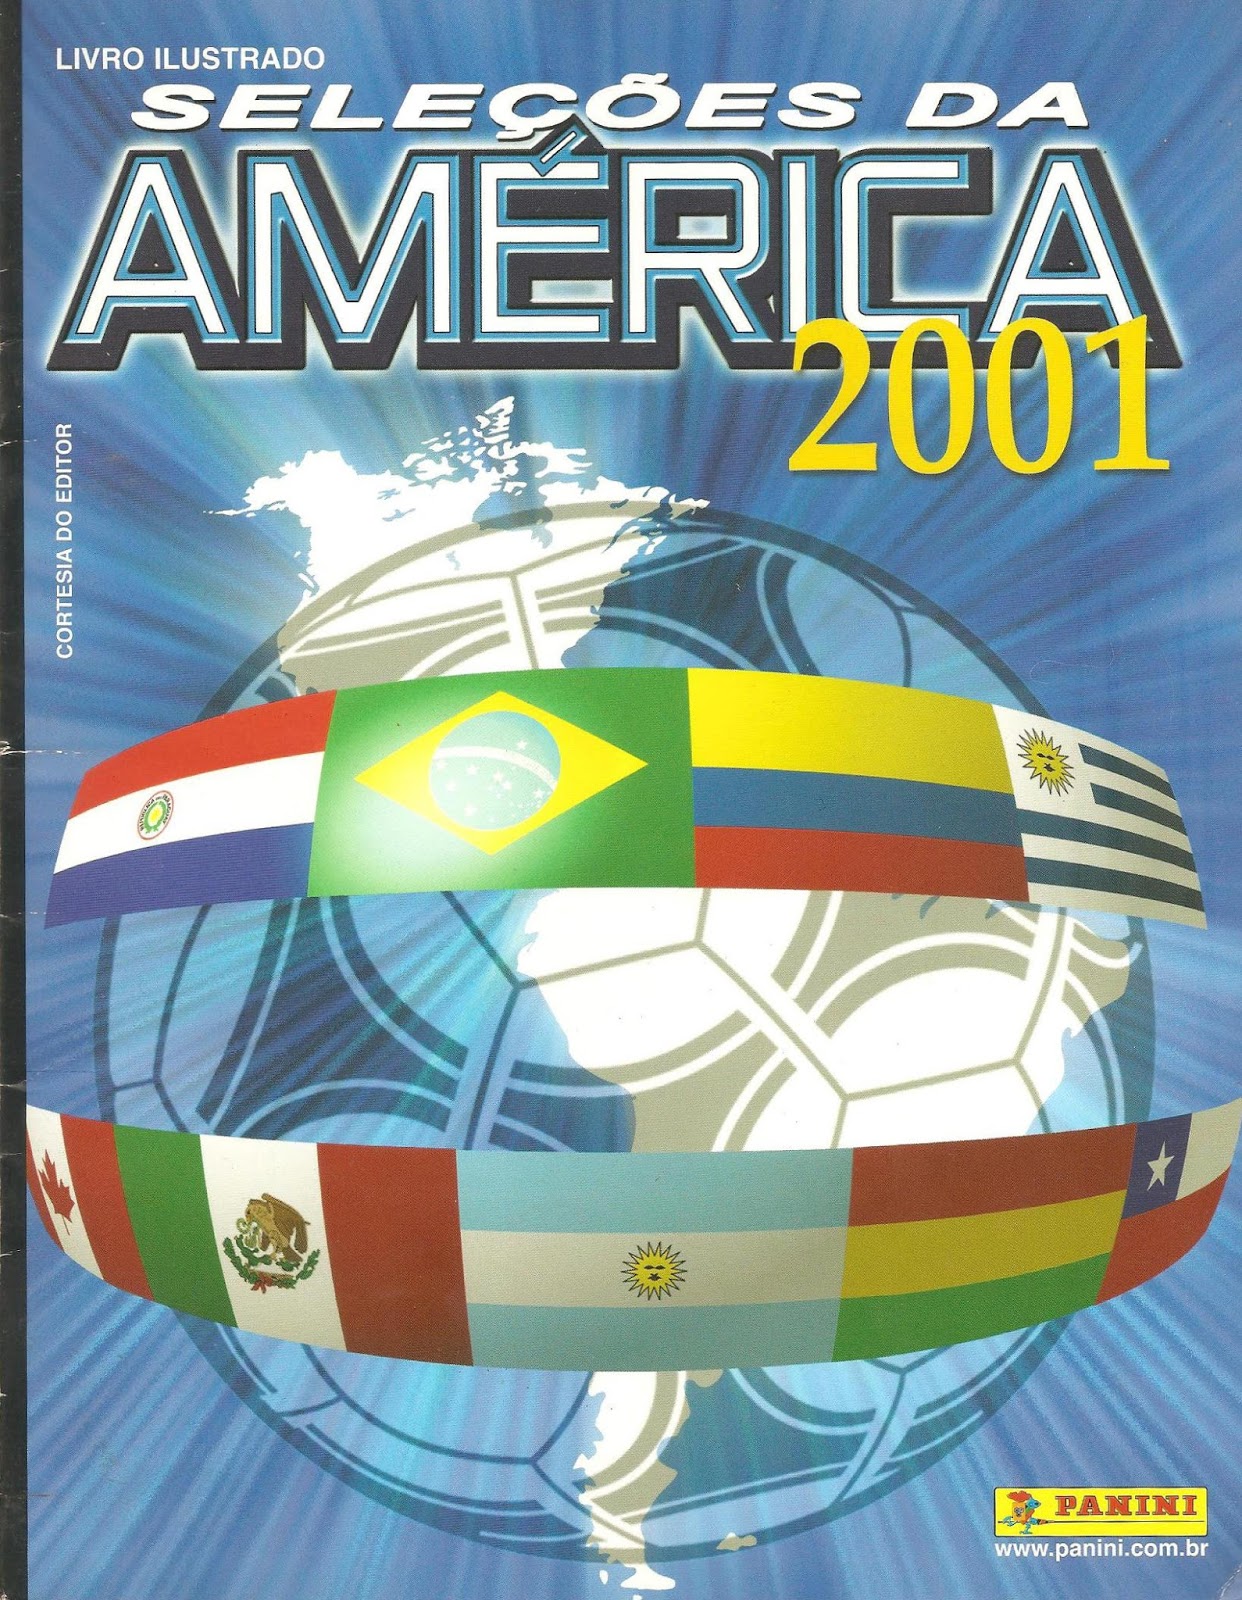 Panini Tüte Copa America 2001 Mega Ultra Rar Version Selecoes pack pochette